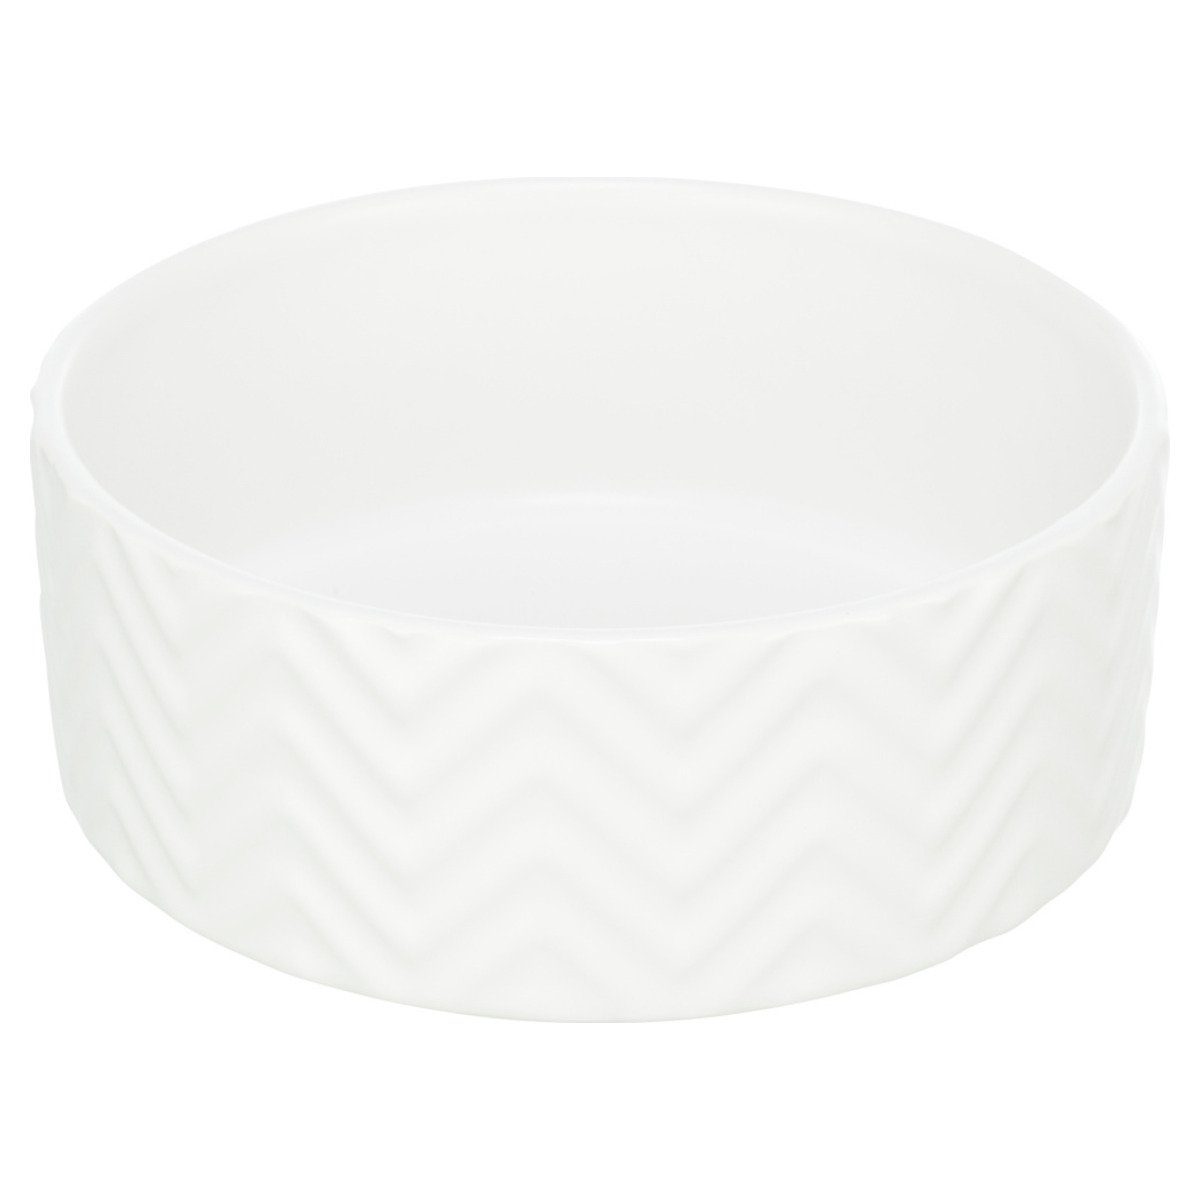 TRIXIE Futterbehälter Keramiknapf weiß, Maße: Ø 13 cm / Fassungsvermögen: 400 ml